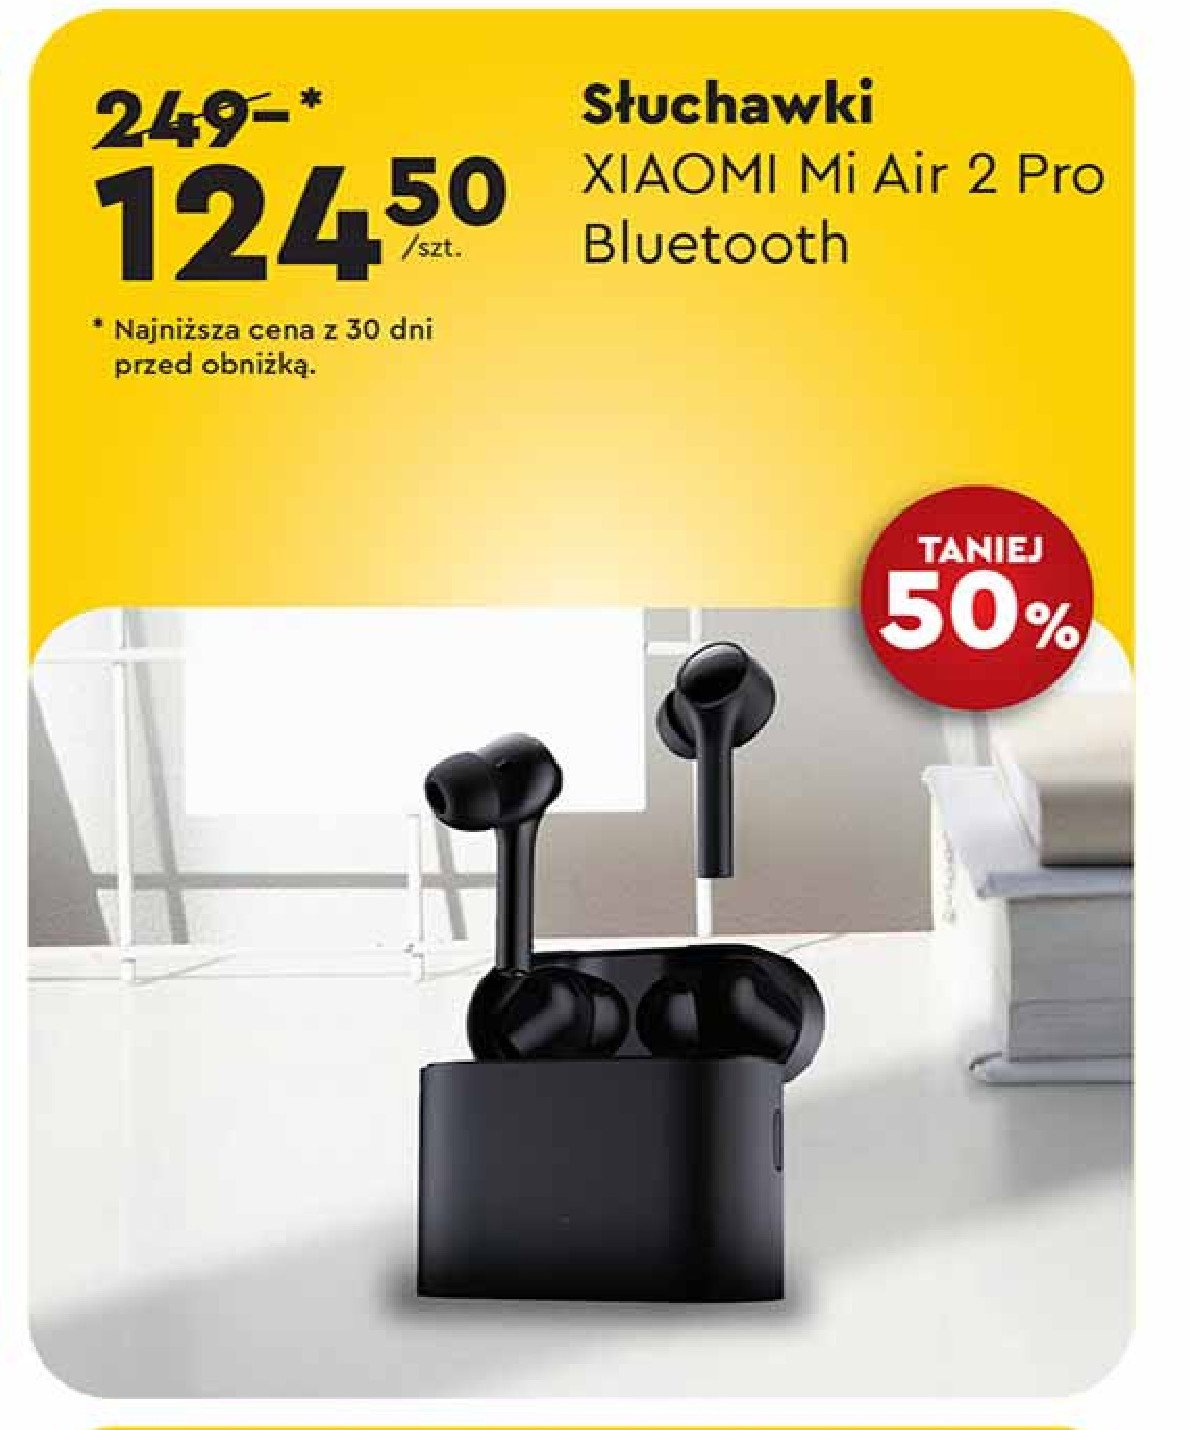 Słuchawki mi air 2 pro Xiaomi promocja w Biedronka